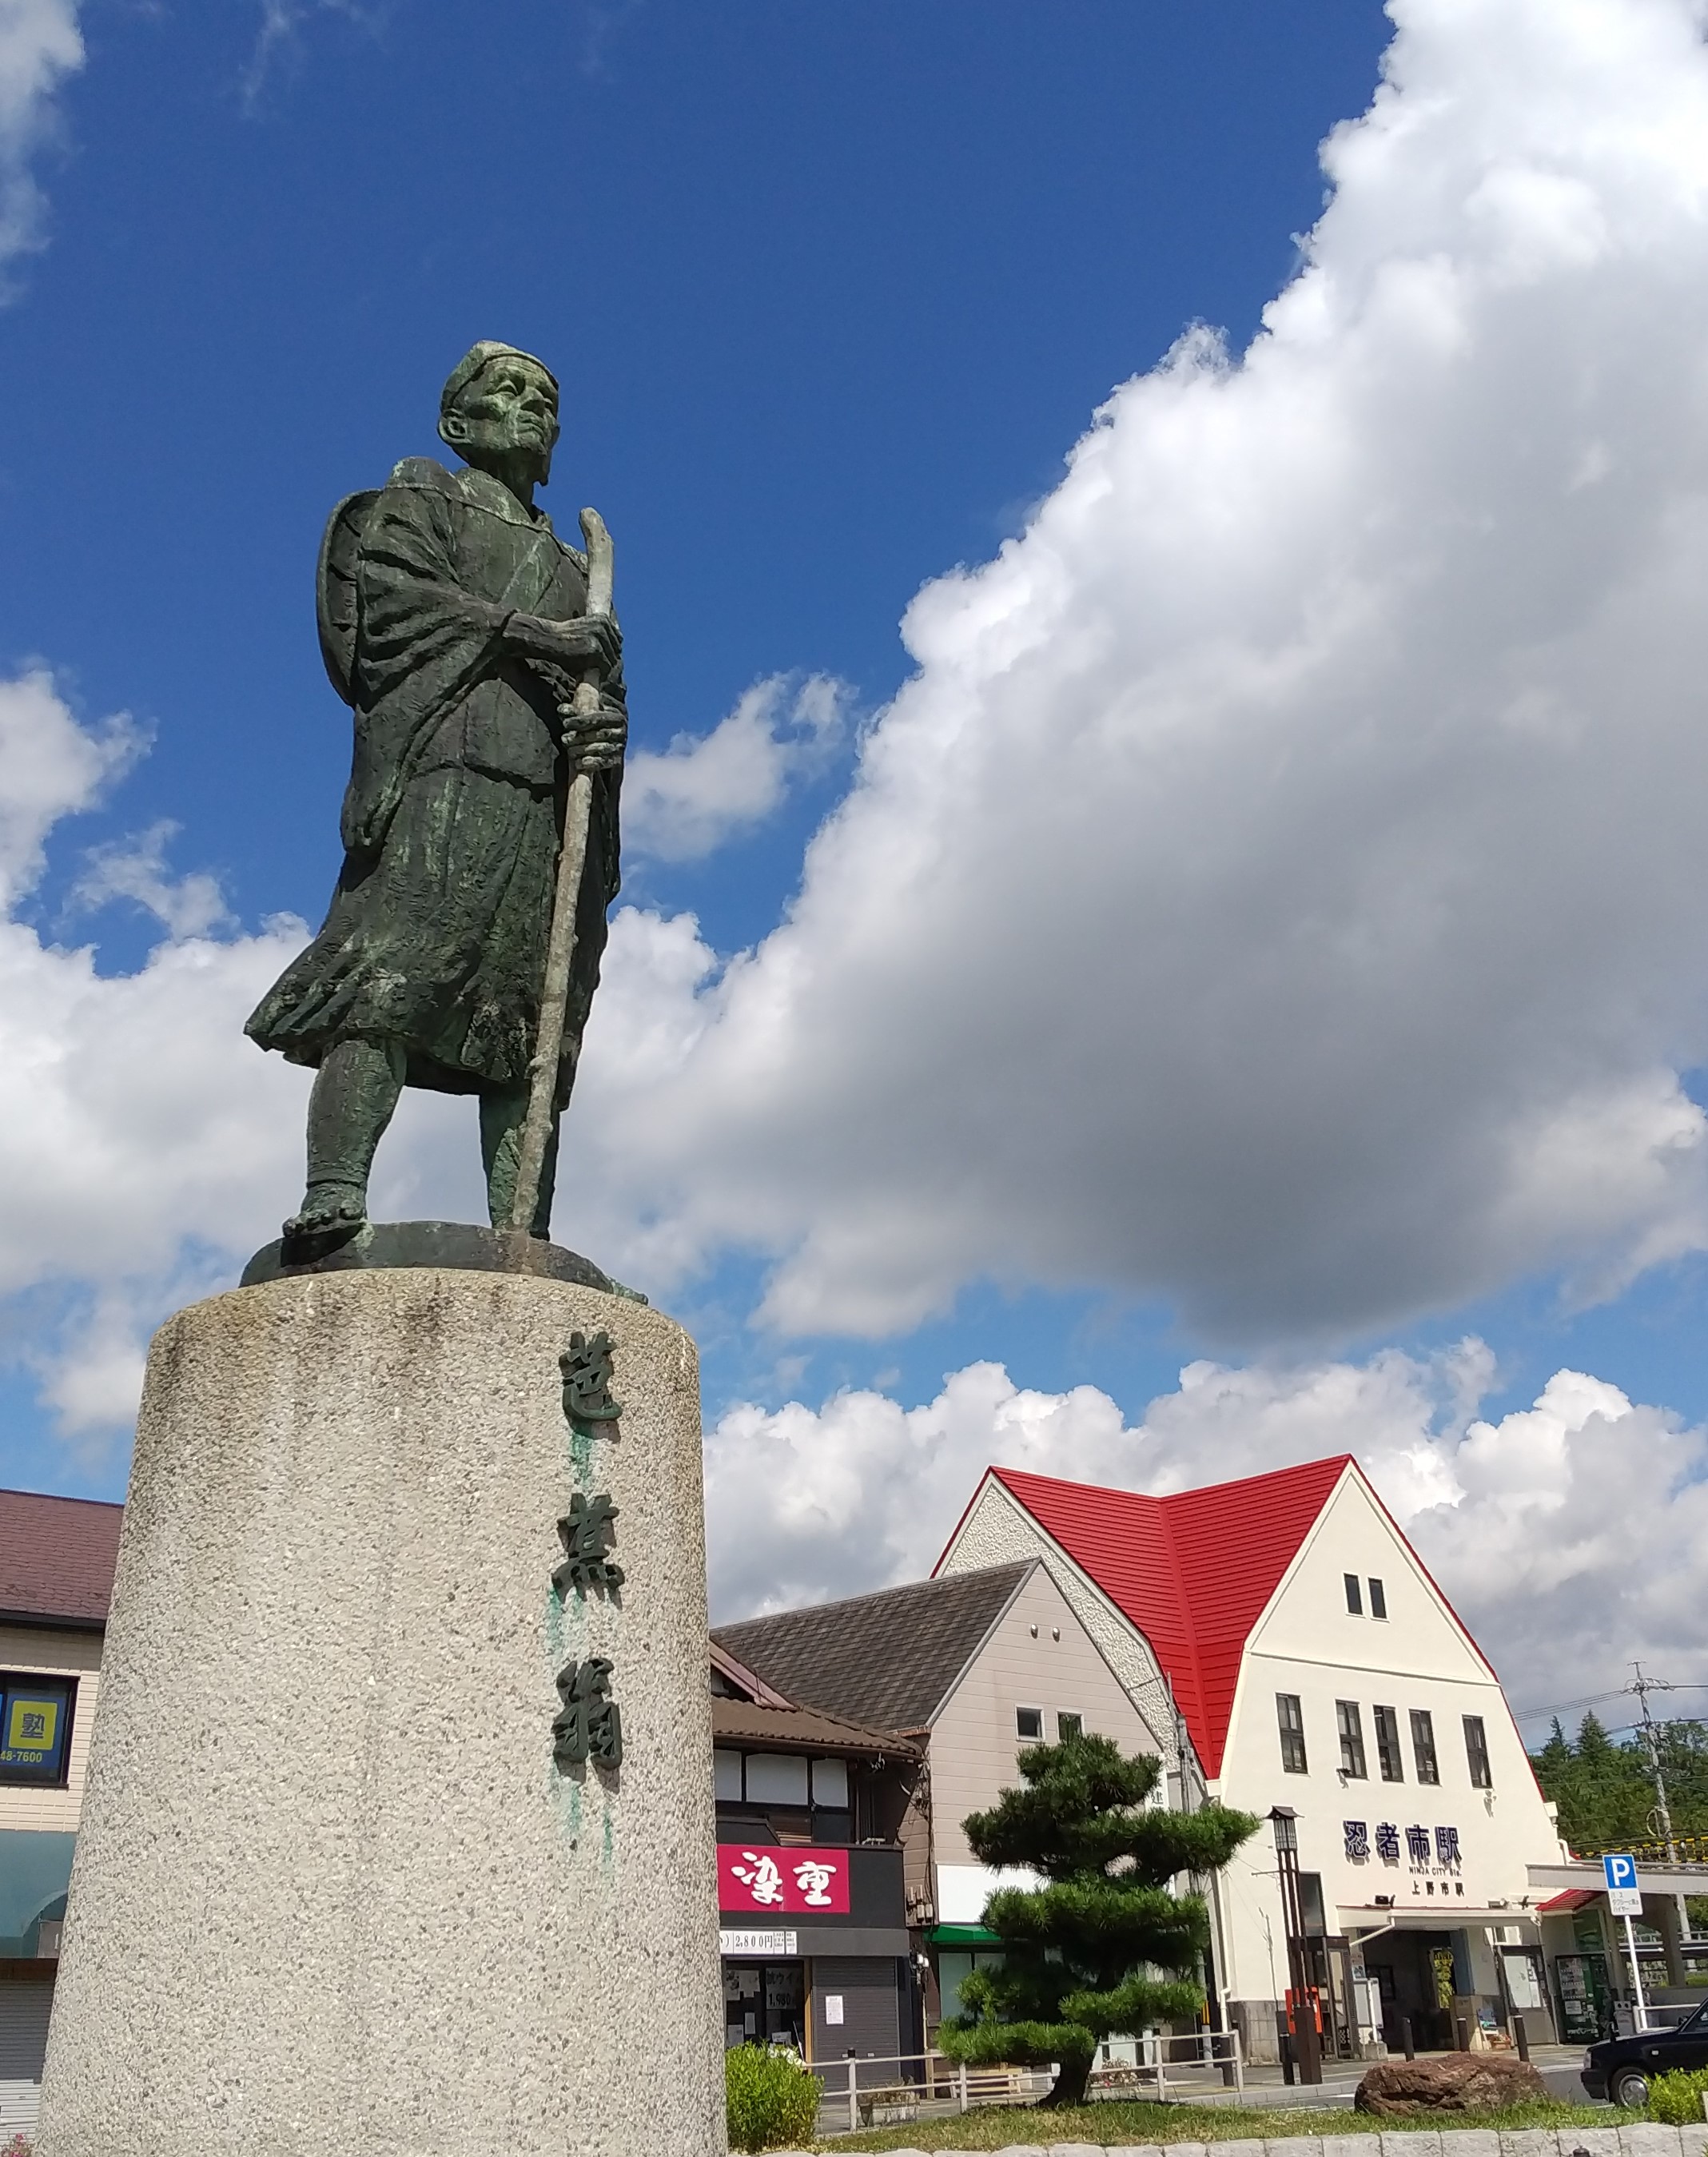 The statue of Matsuo Basho